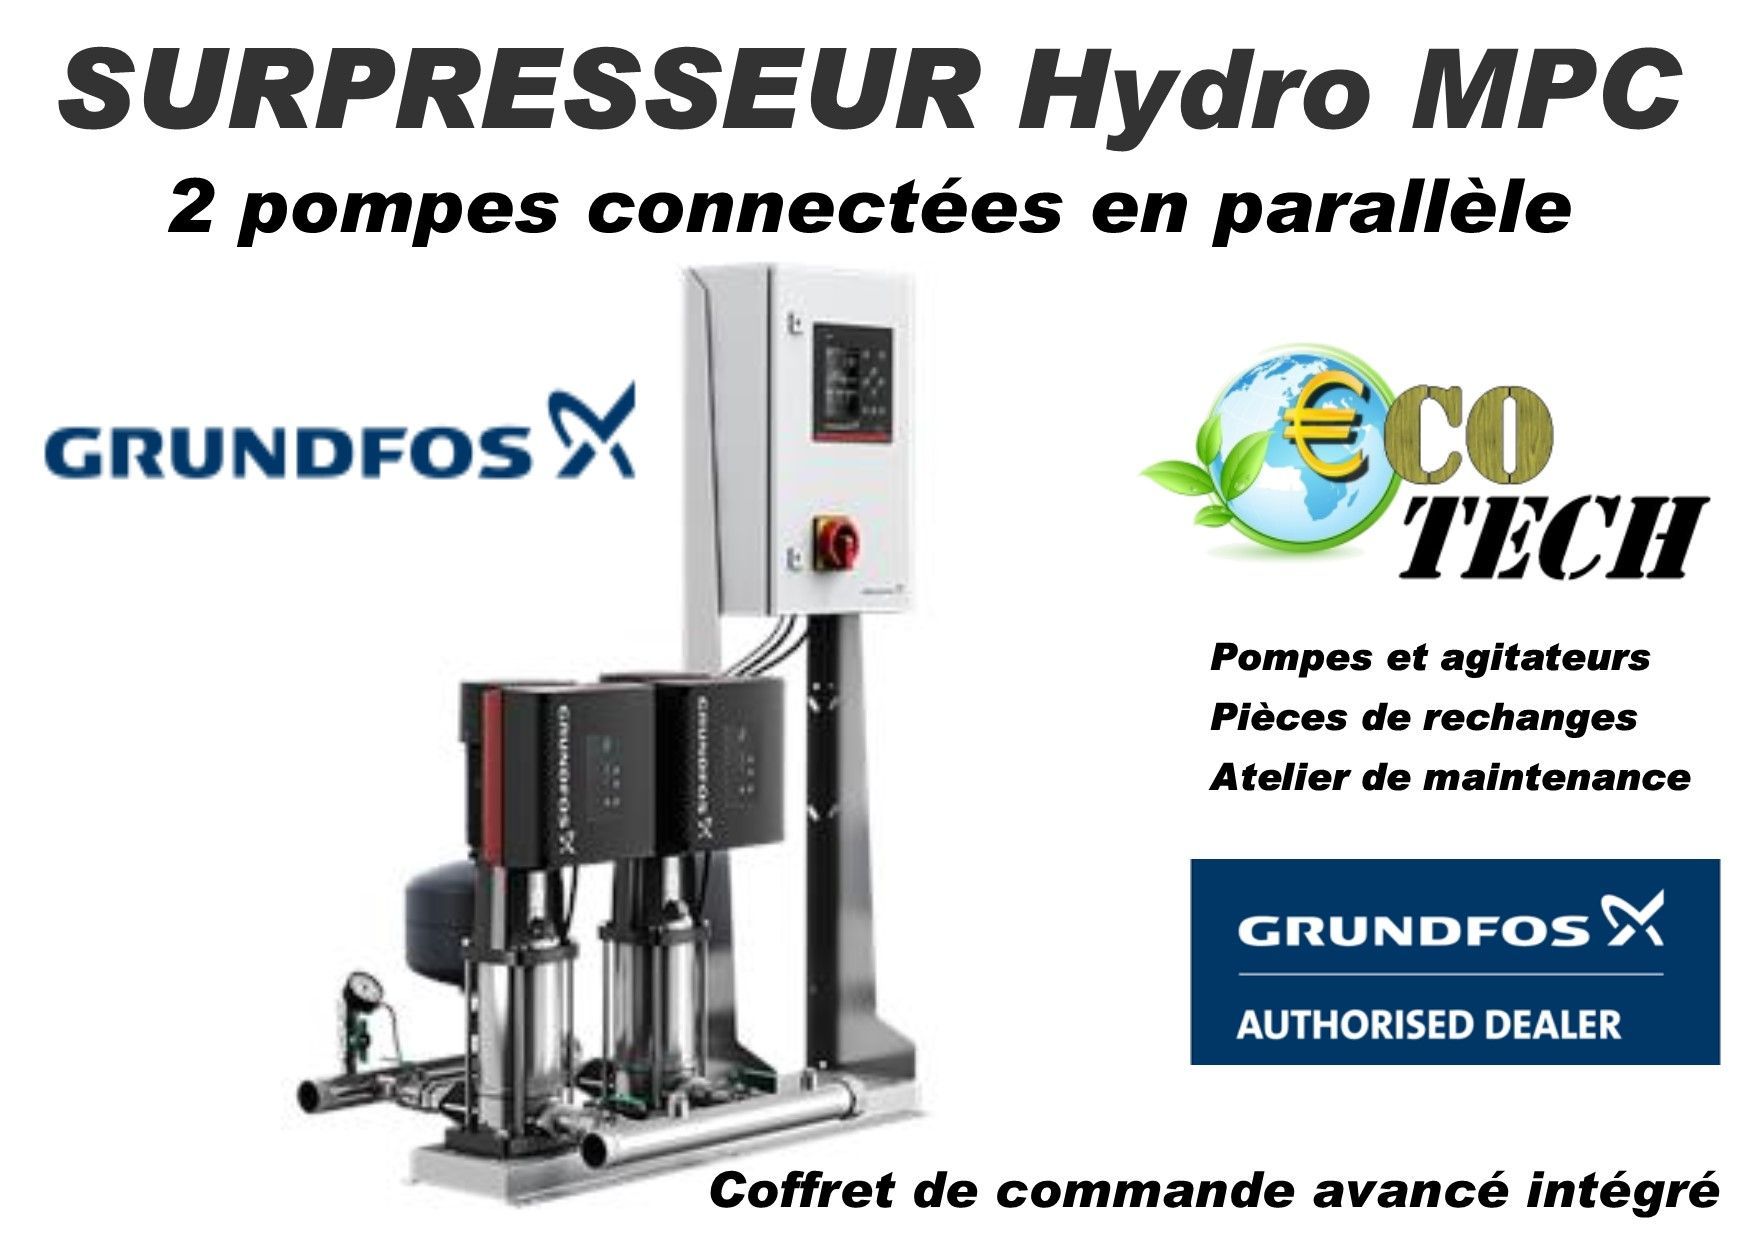 Surpresseur hydro mpc grundfos_0